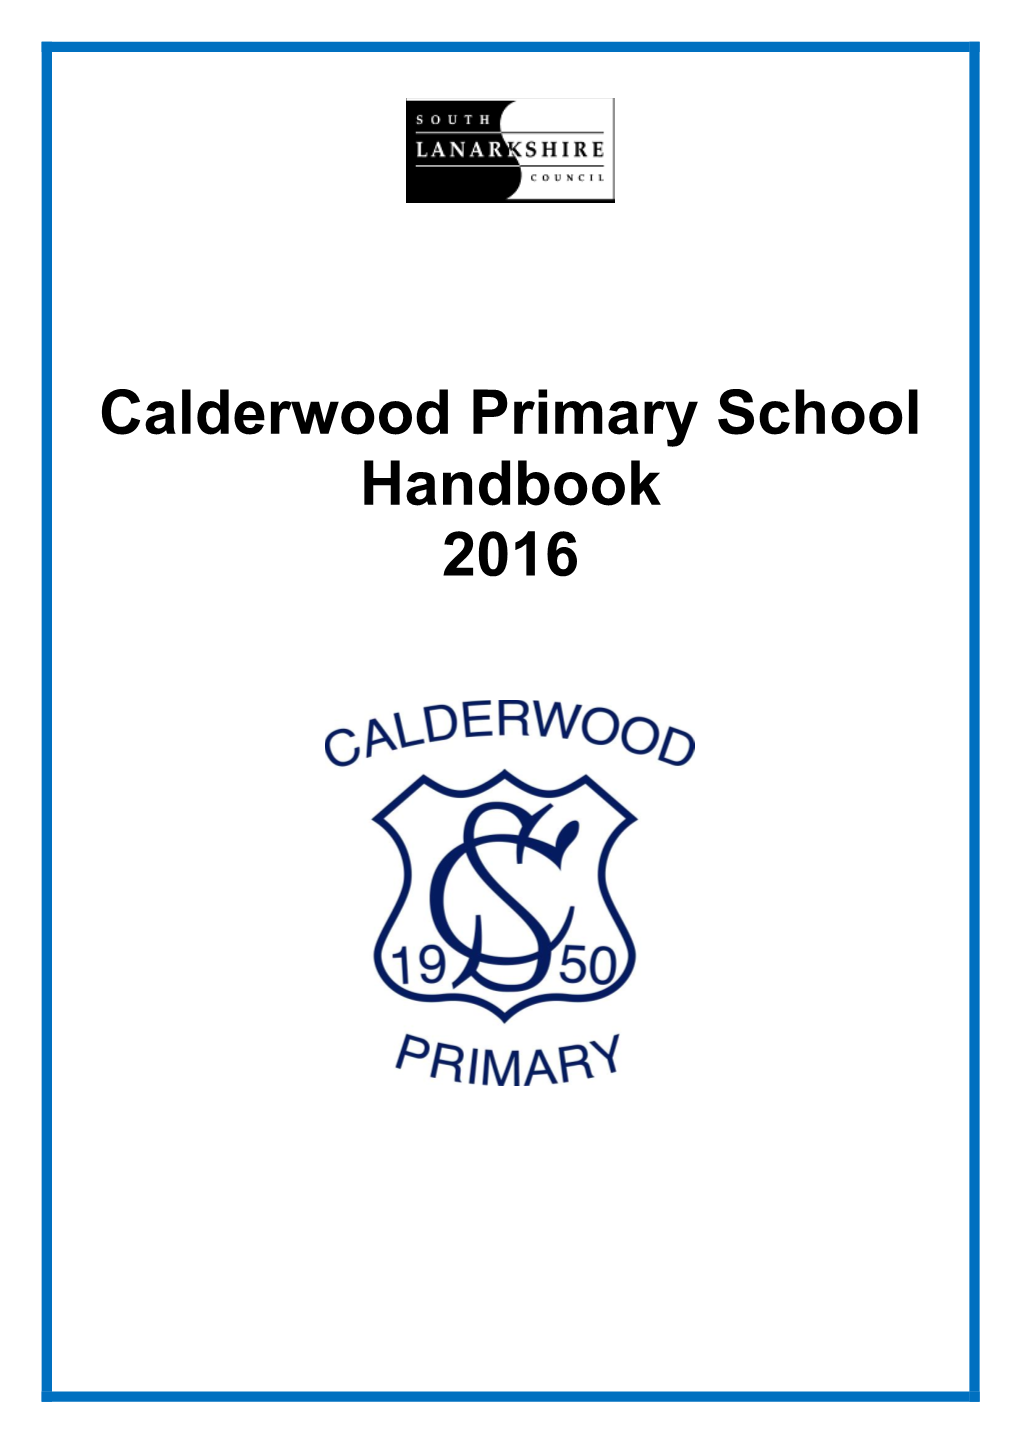 Calderwood Primary School Handbook 2016